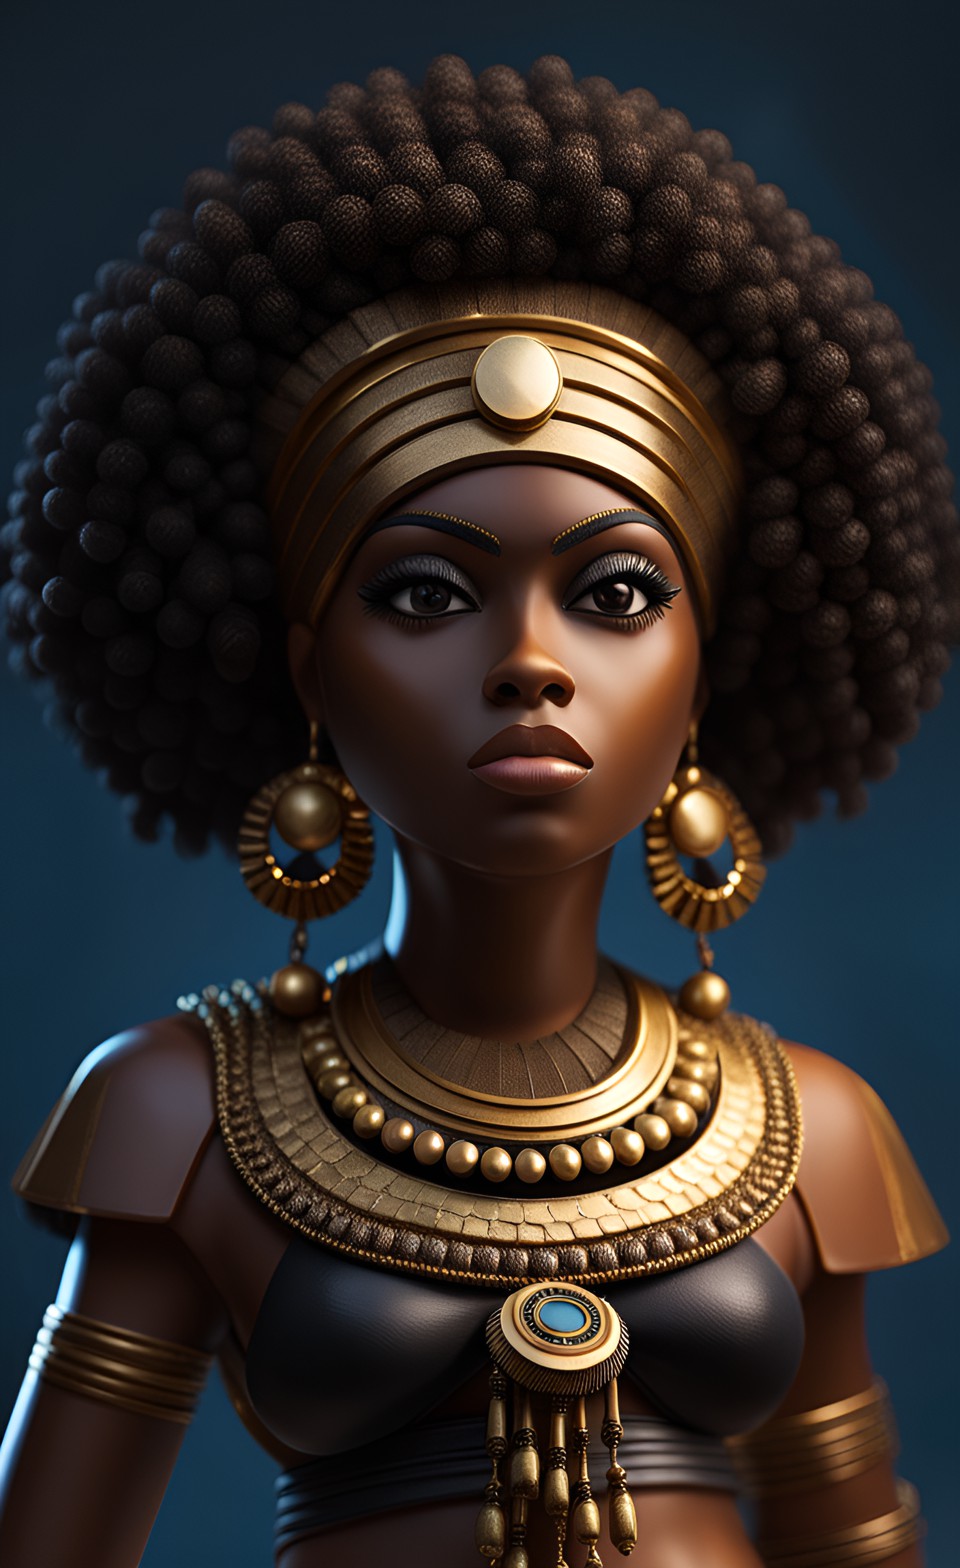 Jamaican cleopatra in ancient jewels Jamai171